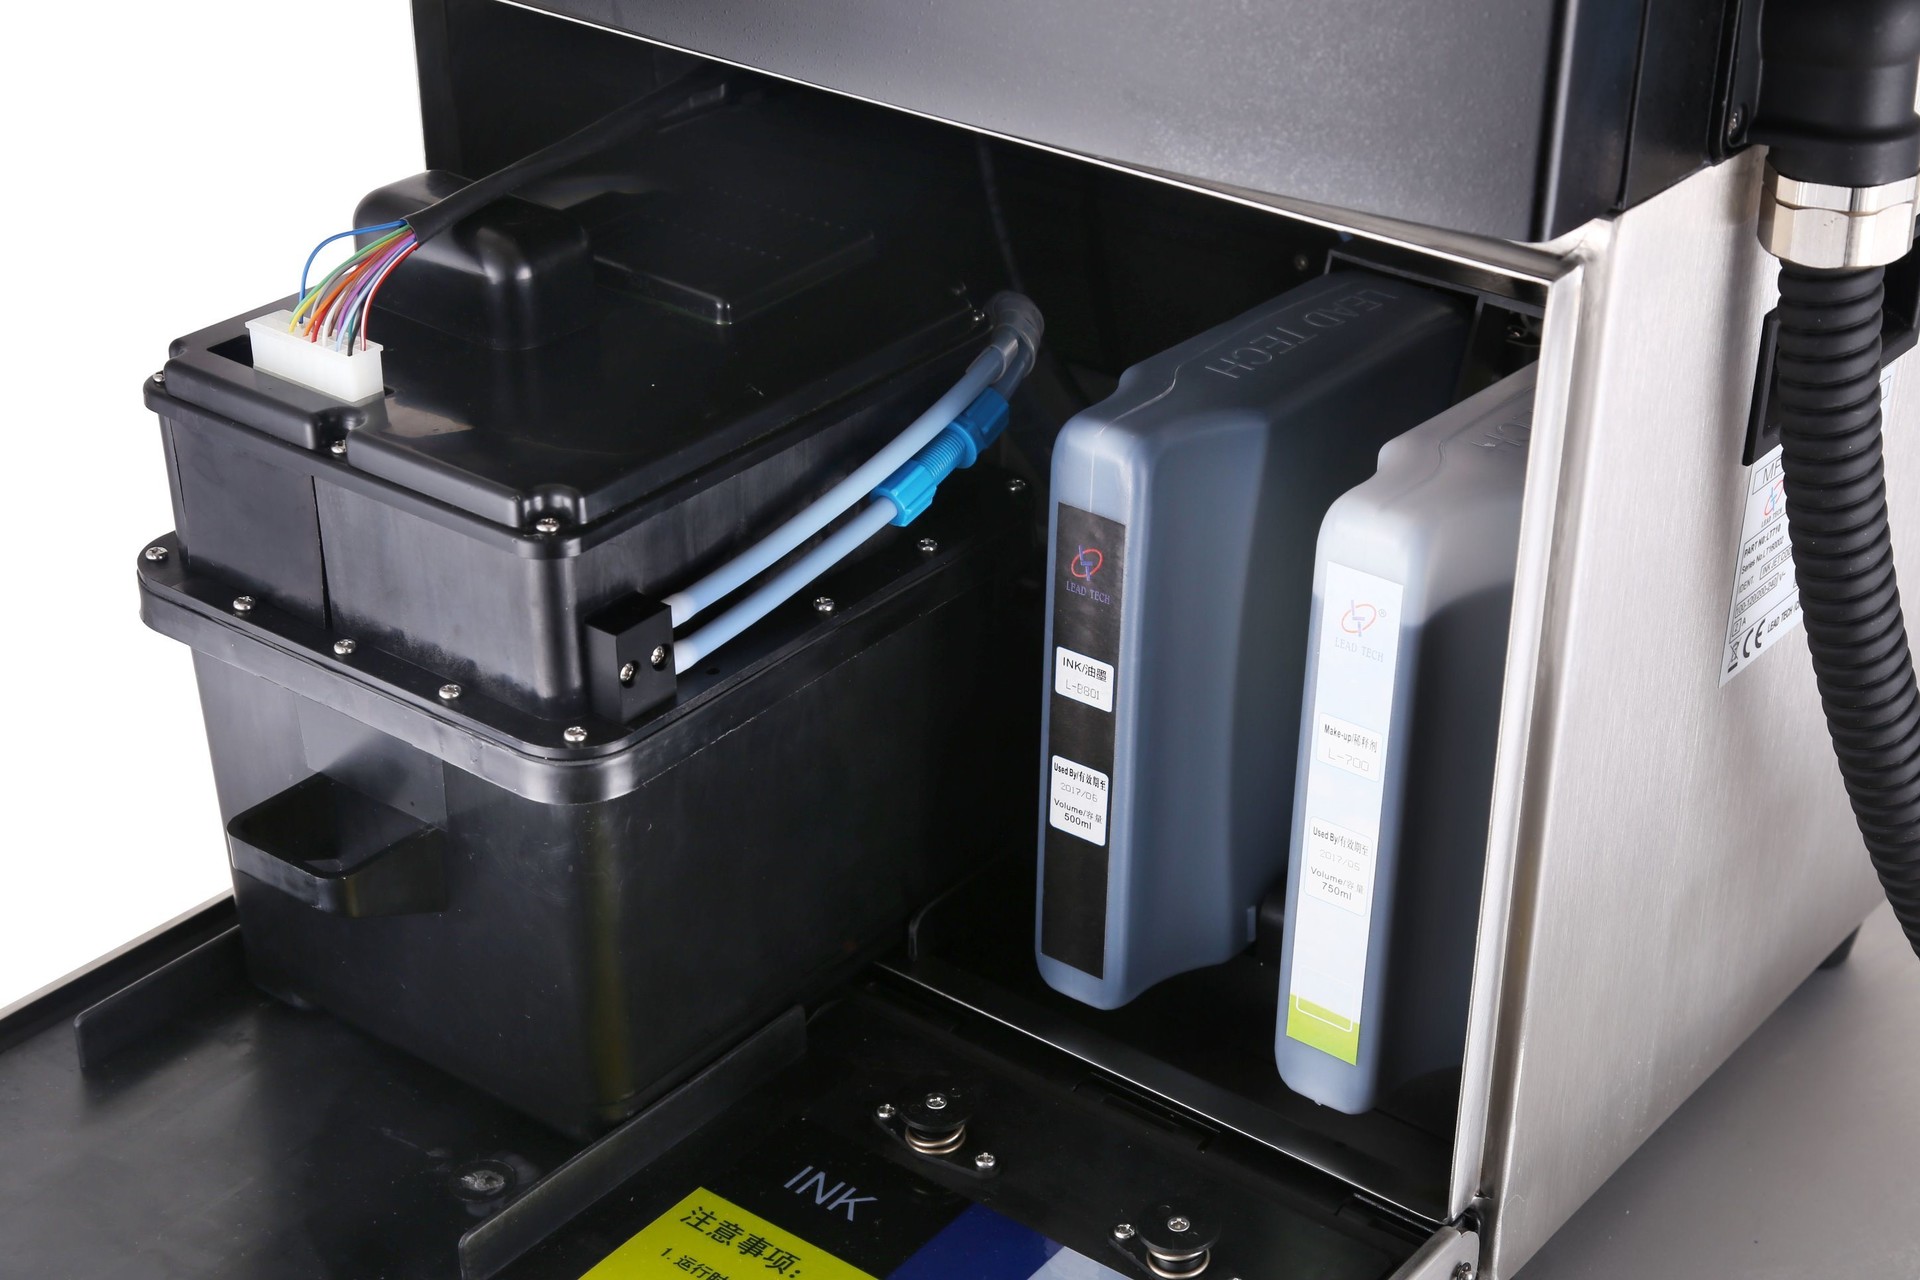 Lead Tech Lt760 Cij Inkjet Printer for PVC Pipe Coding